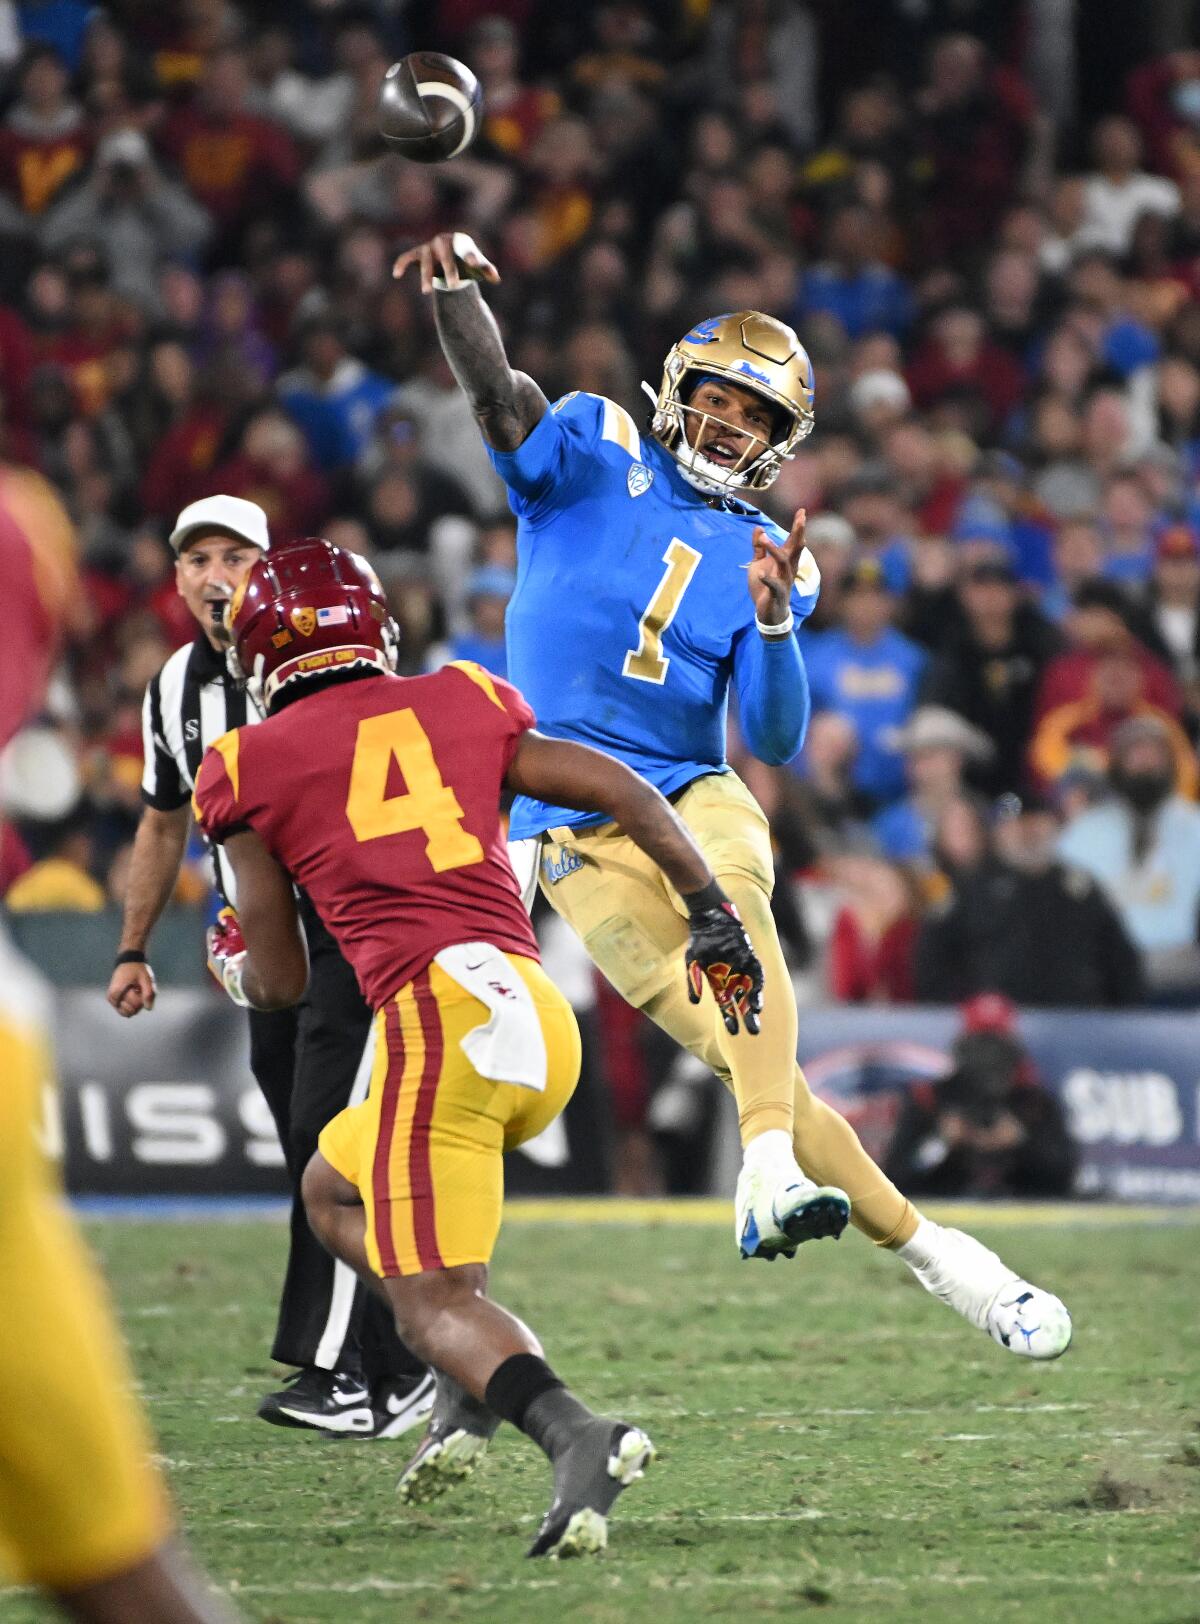 UCLA quarterback Dorian Thompson-Robinson throws a pass against USC in the fourth quarter Saturday.